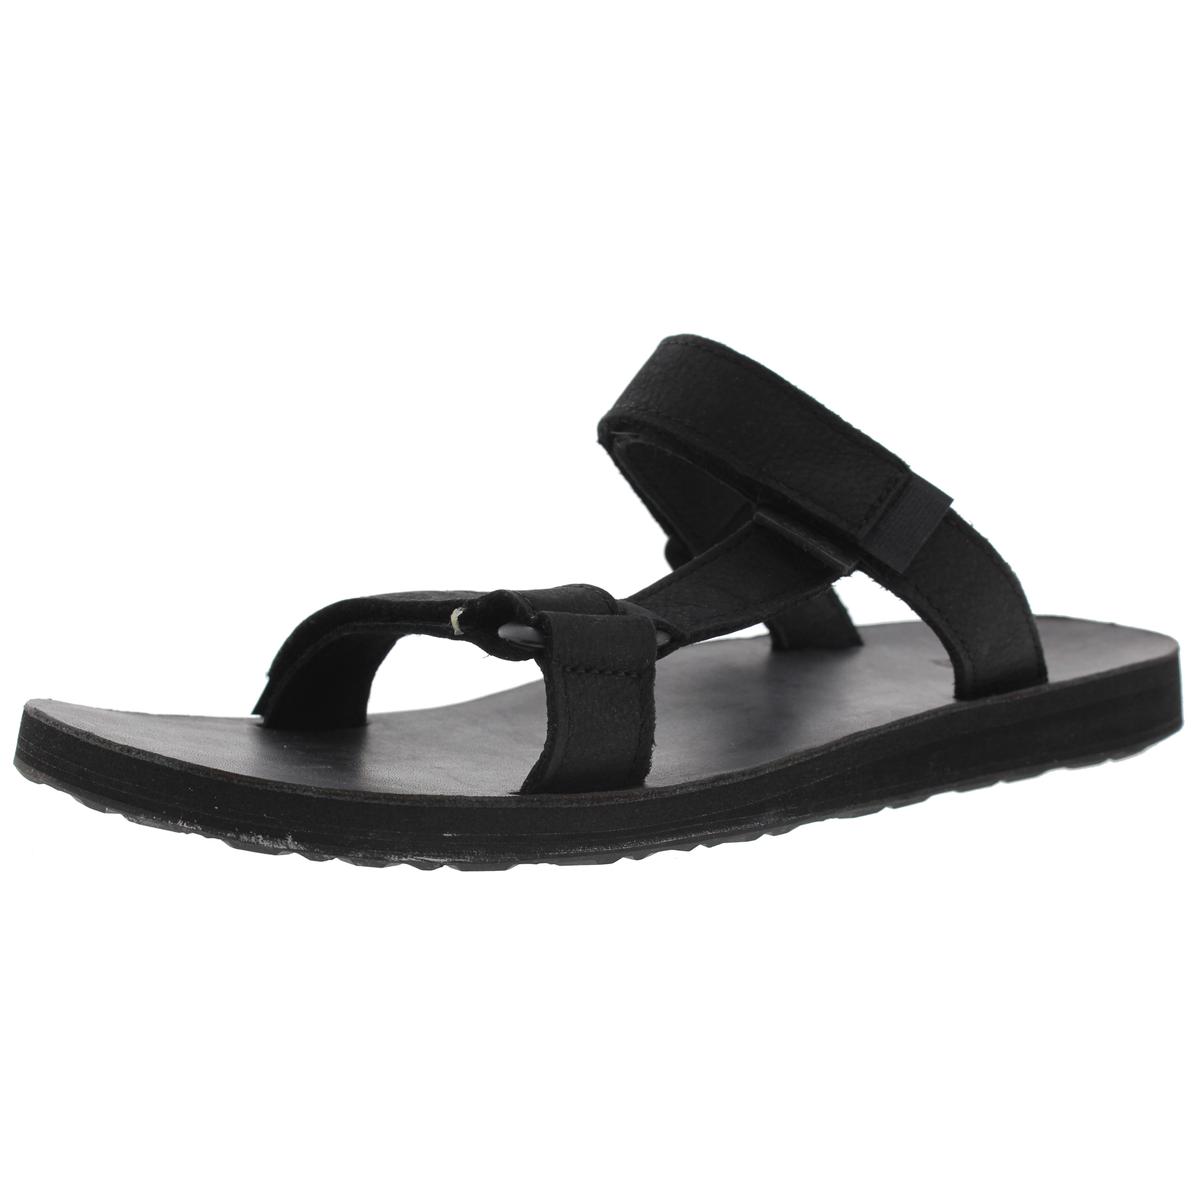 Teva 4589 Mens Universal Leather Adjustable Slide Sandals Shoes BHFO | eBay